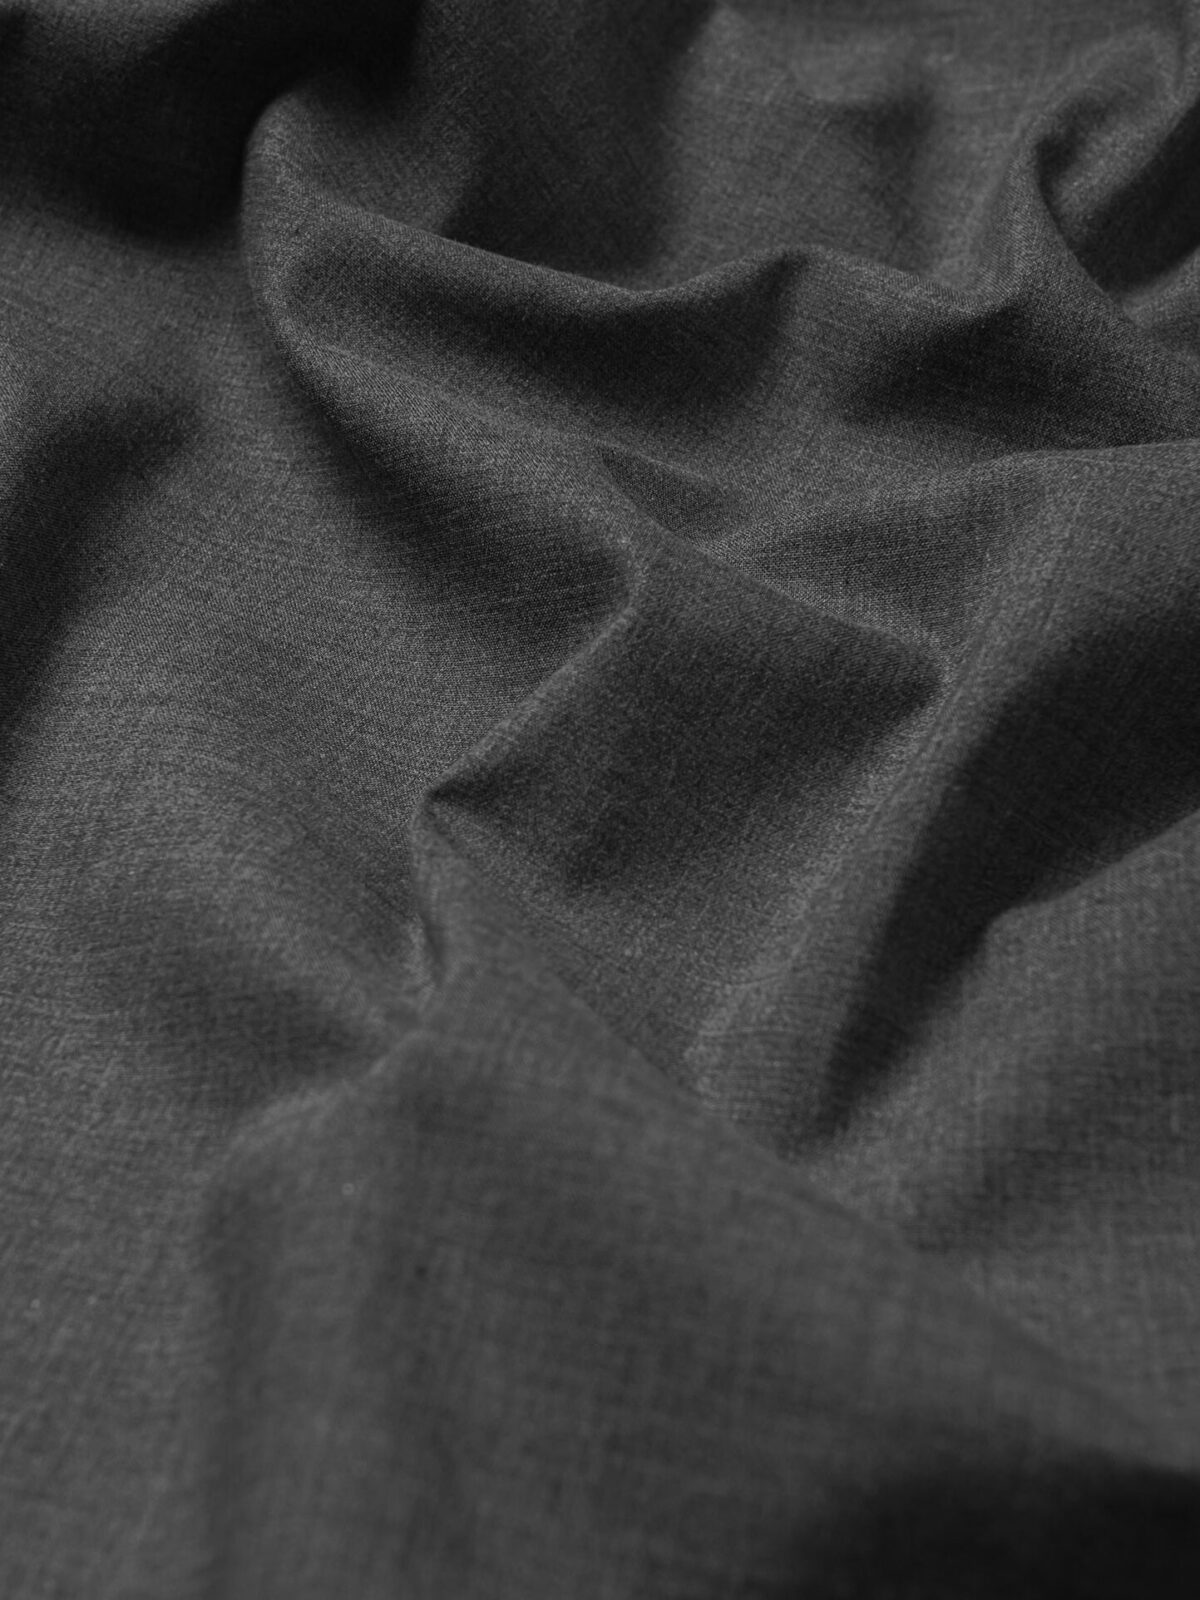 Bleecker Charcoal Melange Plain Weave Shirts by Proper Cloth